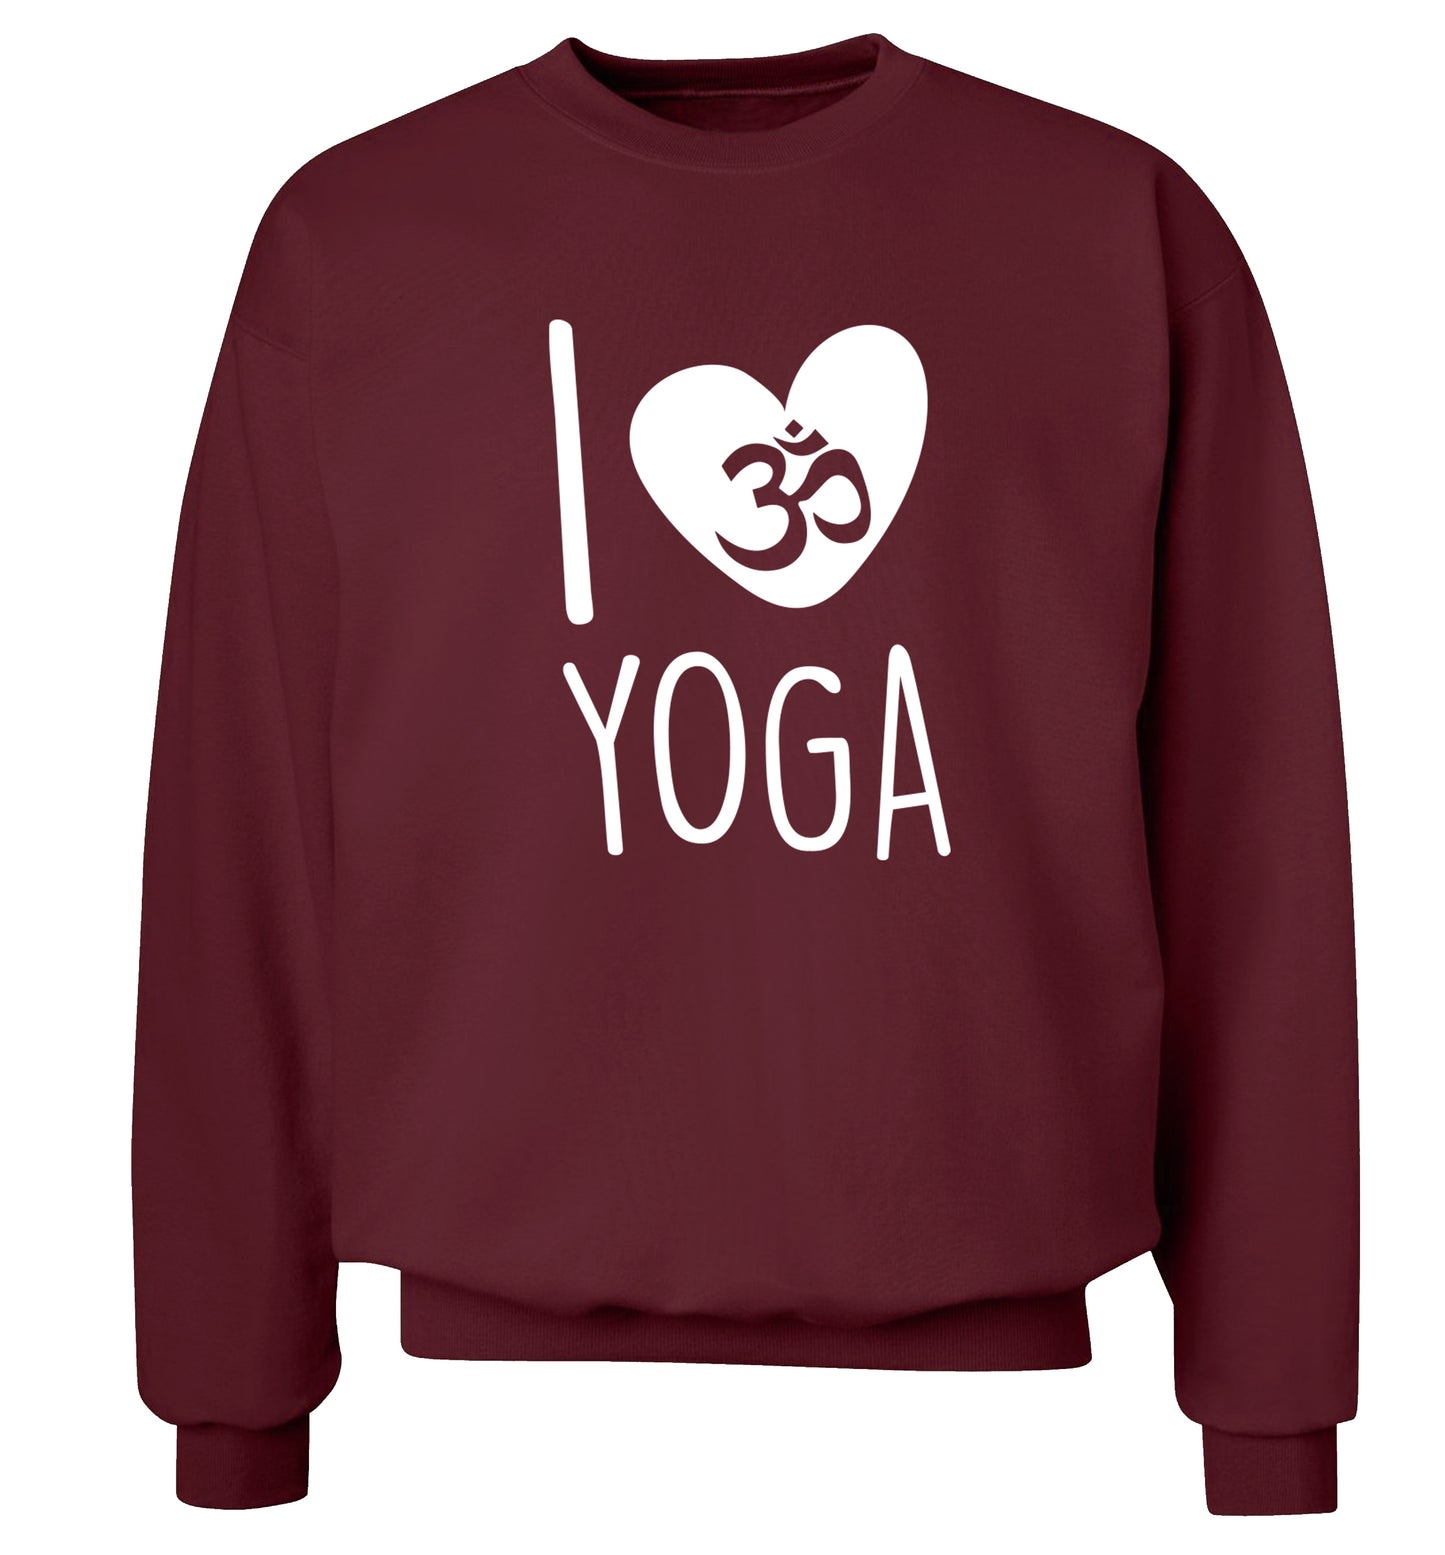 I love yoga Adult's unisex maroon Sweater 2XL